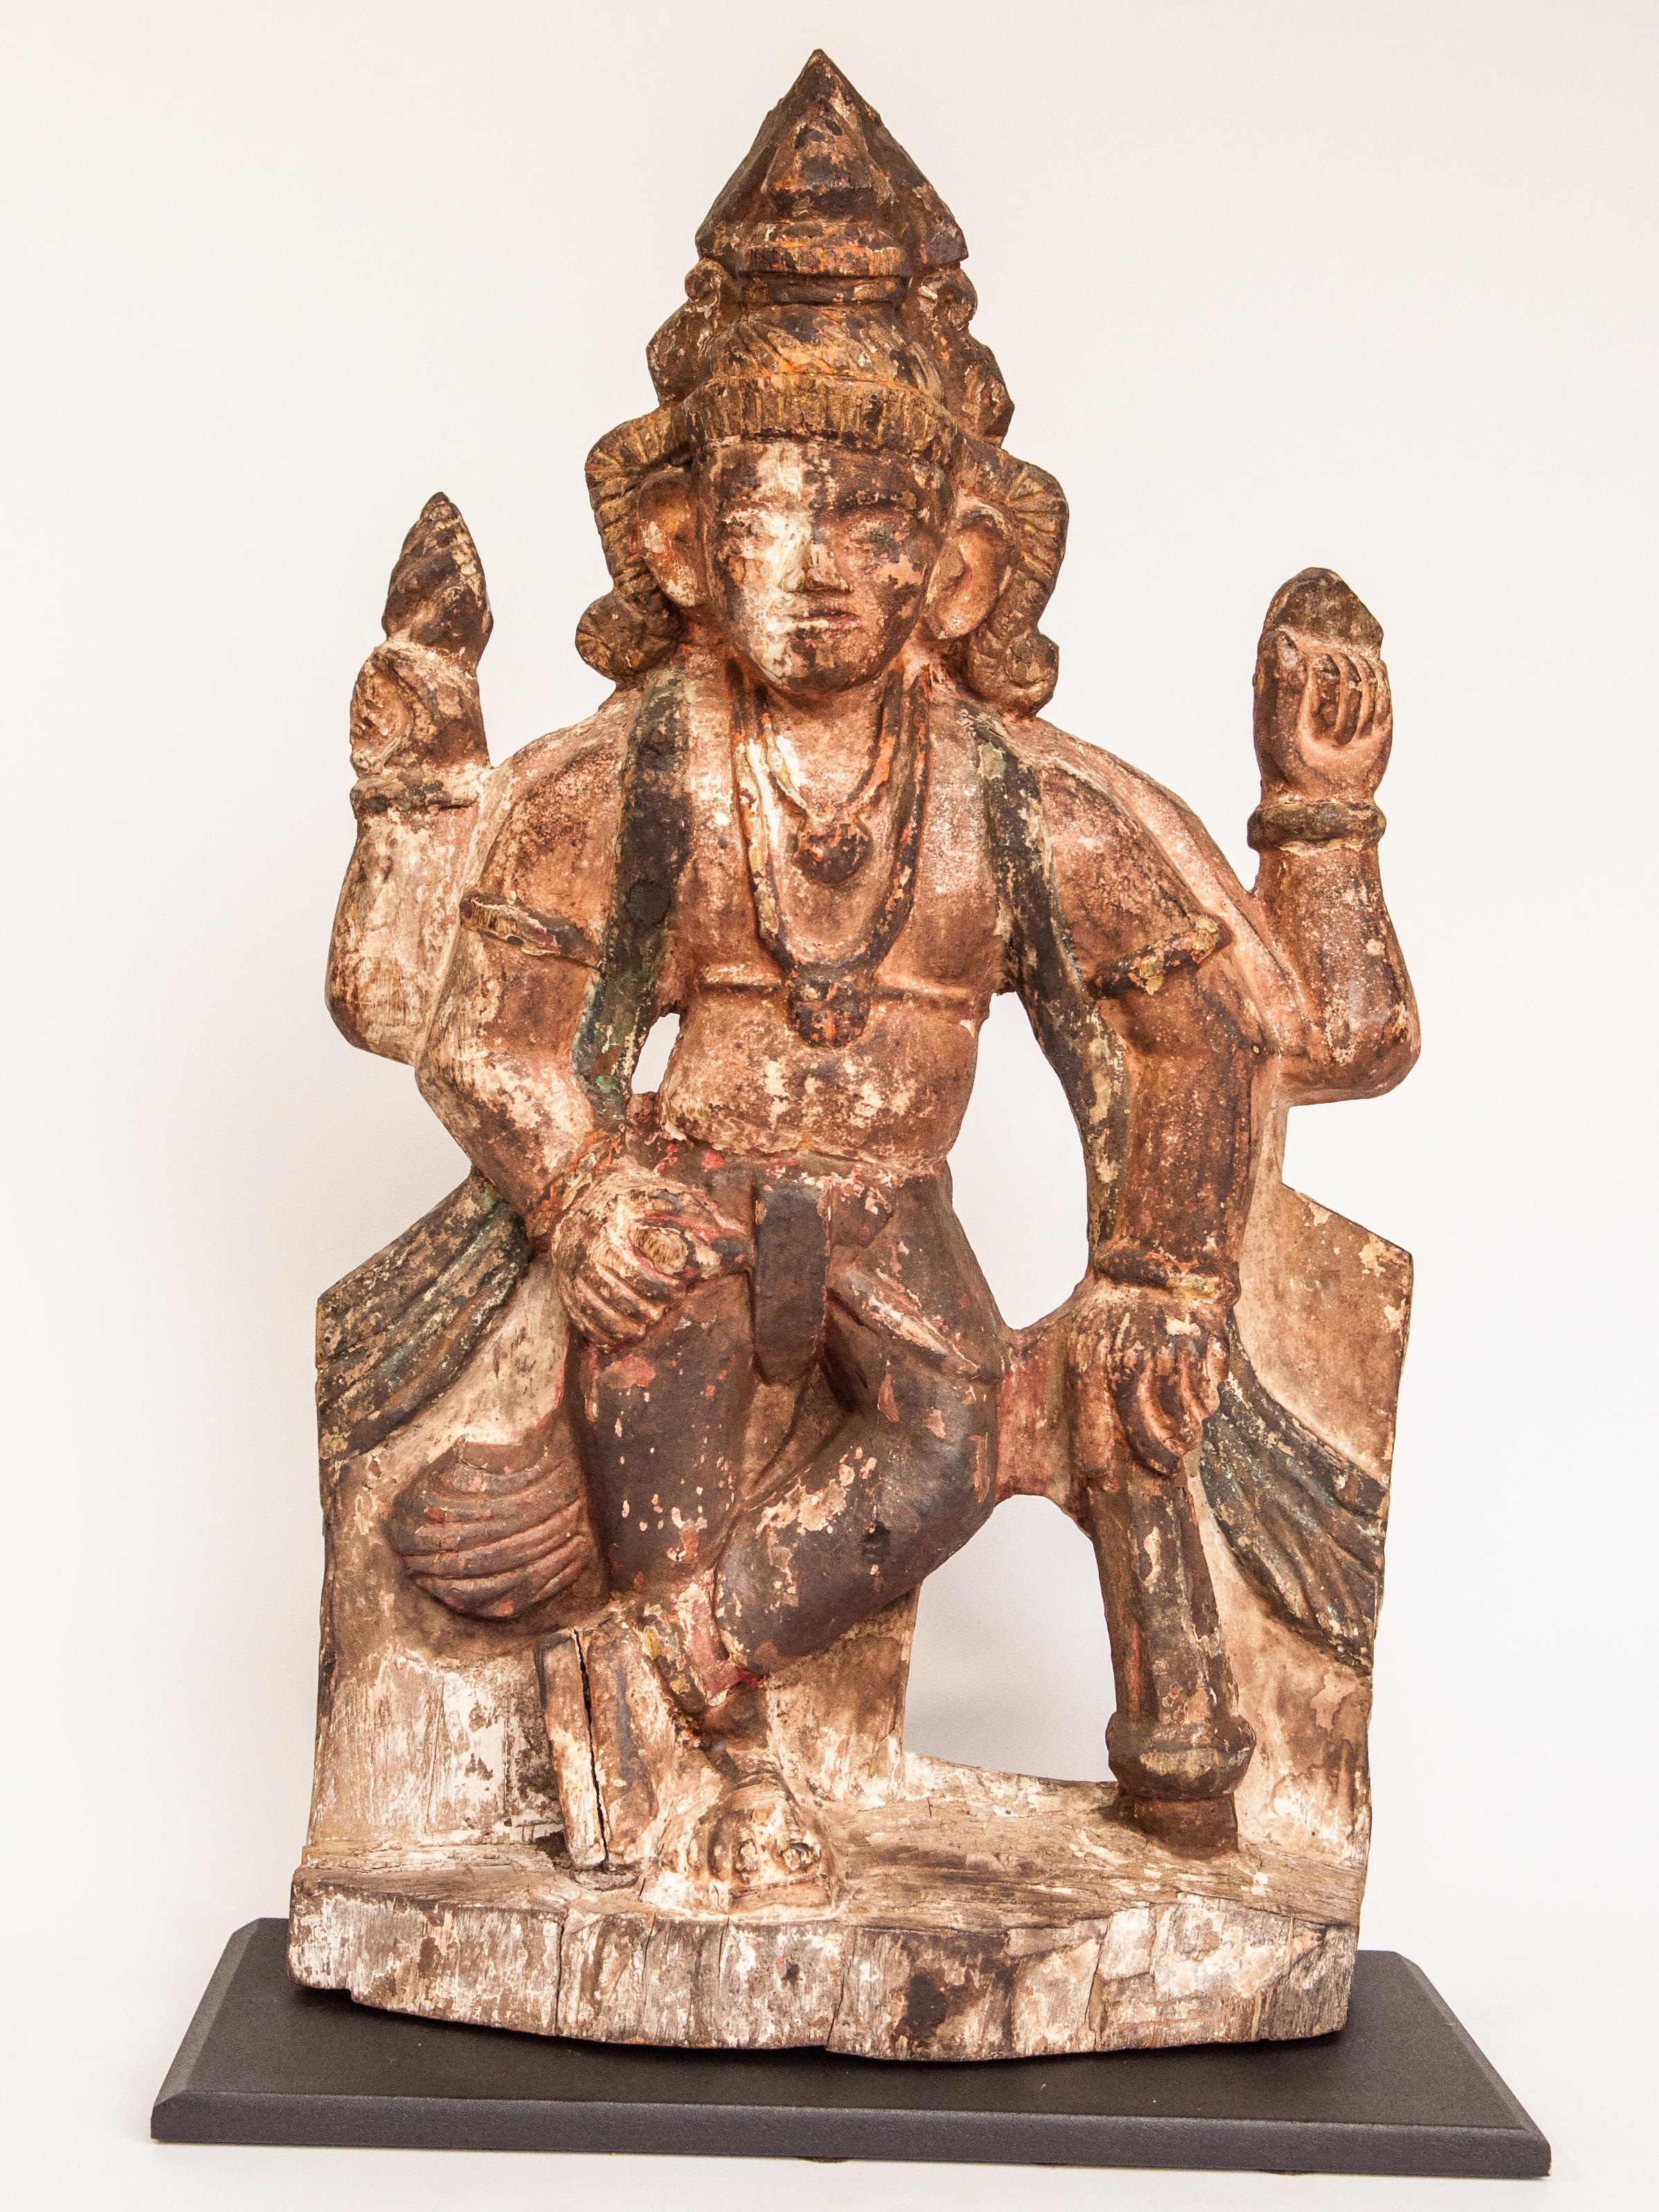 Pair of vintage wood guardian statues from India early 20th century. Jaya-Vijaya. Mounted on metal plates.
Jaya and Vijaya are the Guardians or Gatekeepers (Dvarapalas) of the God Vishnu's celestial abode, Vaikuntha, and are often found represented